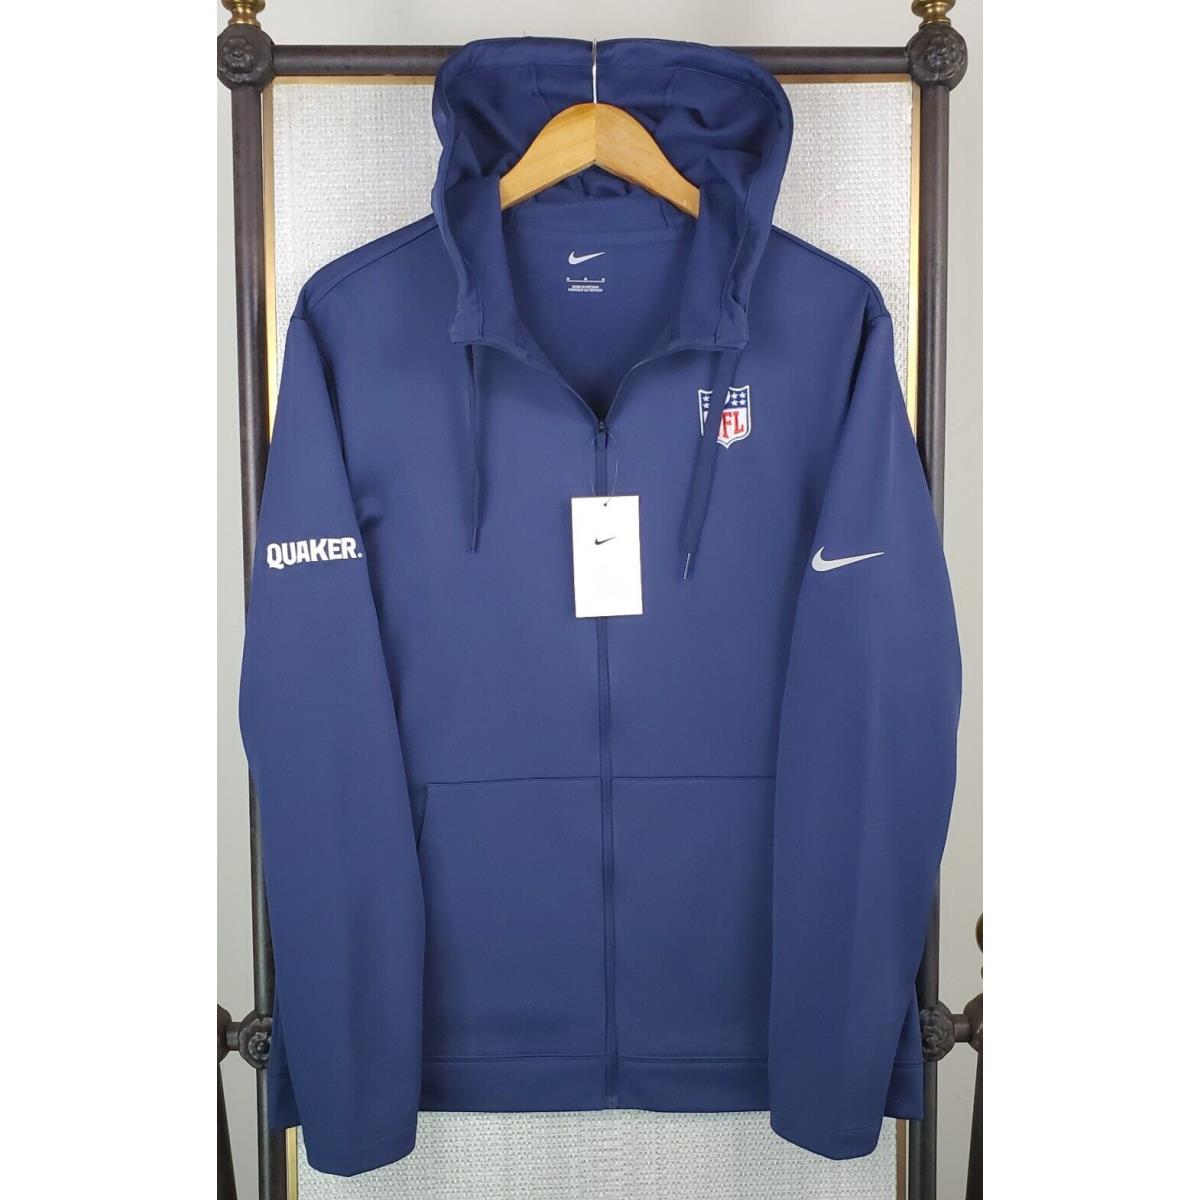 Nike Golf x Nfl x Quaker Size Medium Full Zip Hooded Jacket Blue Pockets